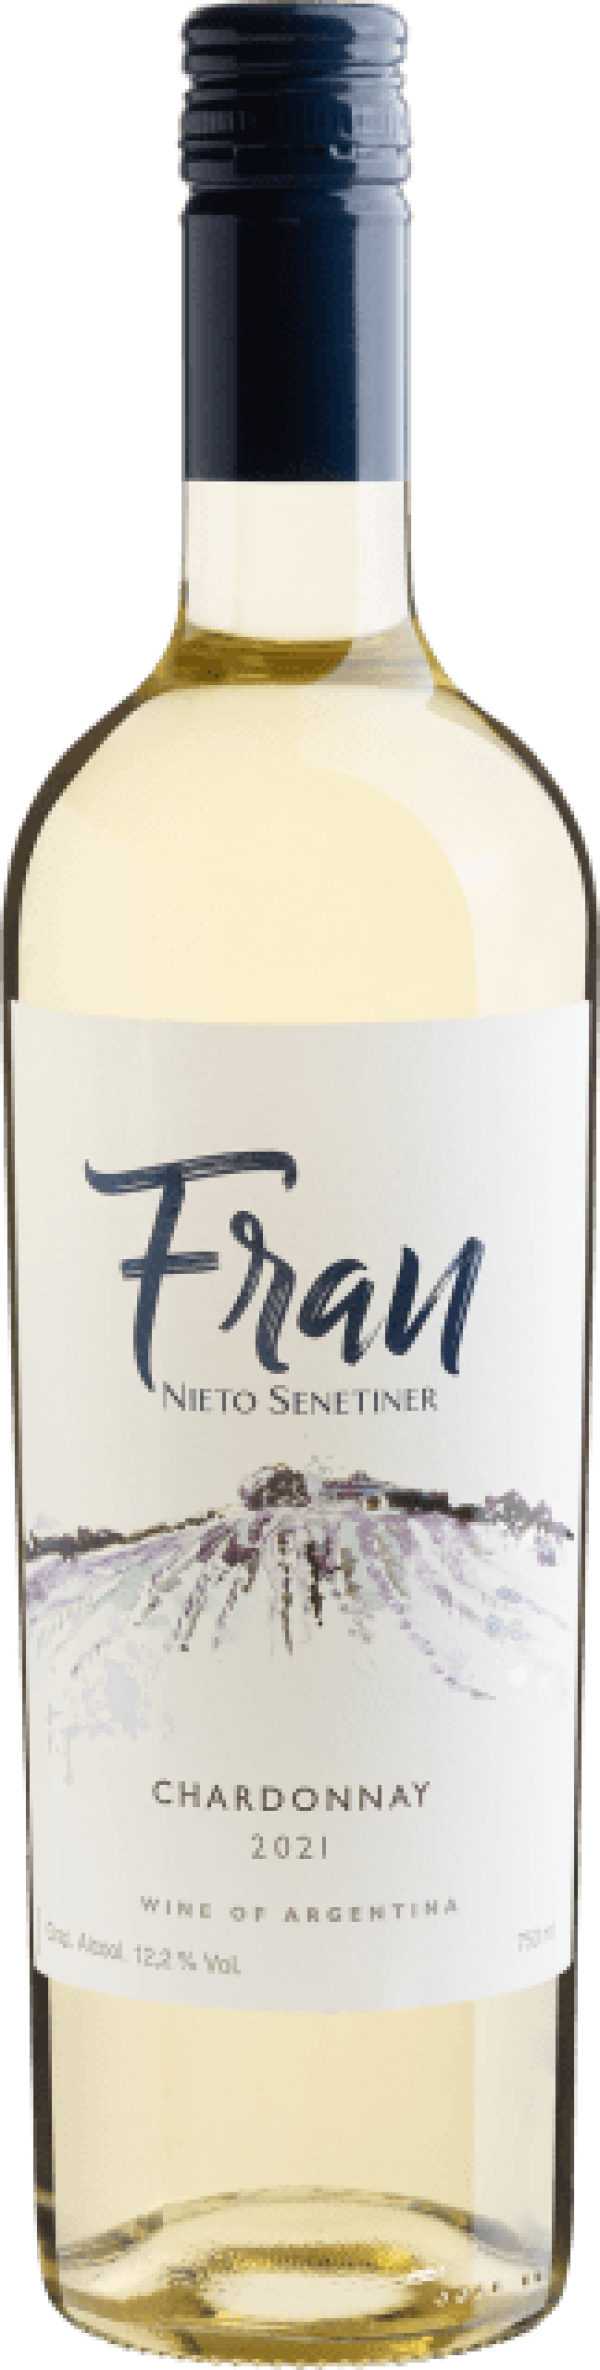 Nieto Senetiner Fran Chardonnay 2021